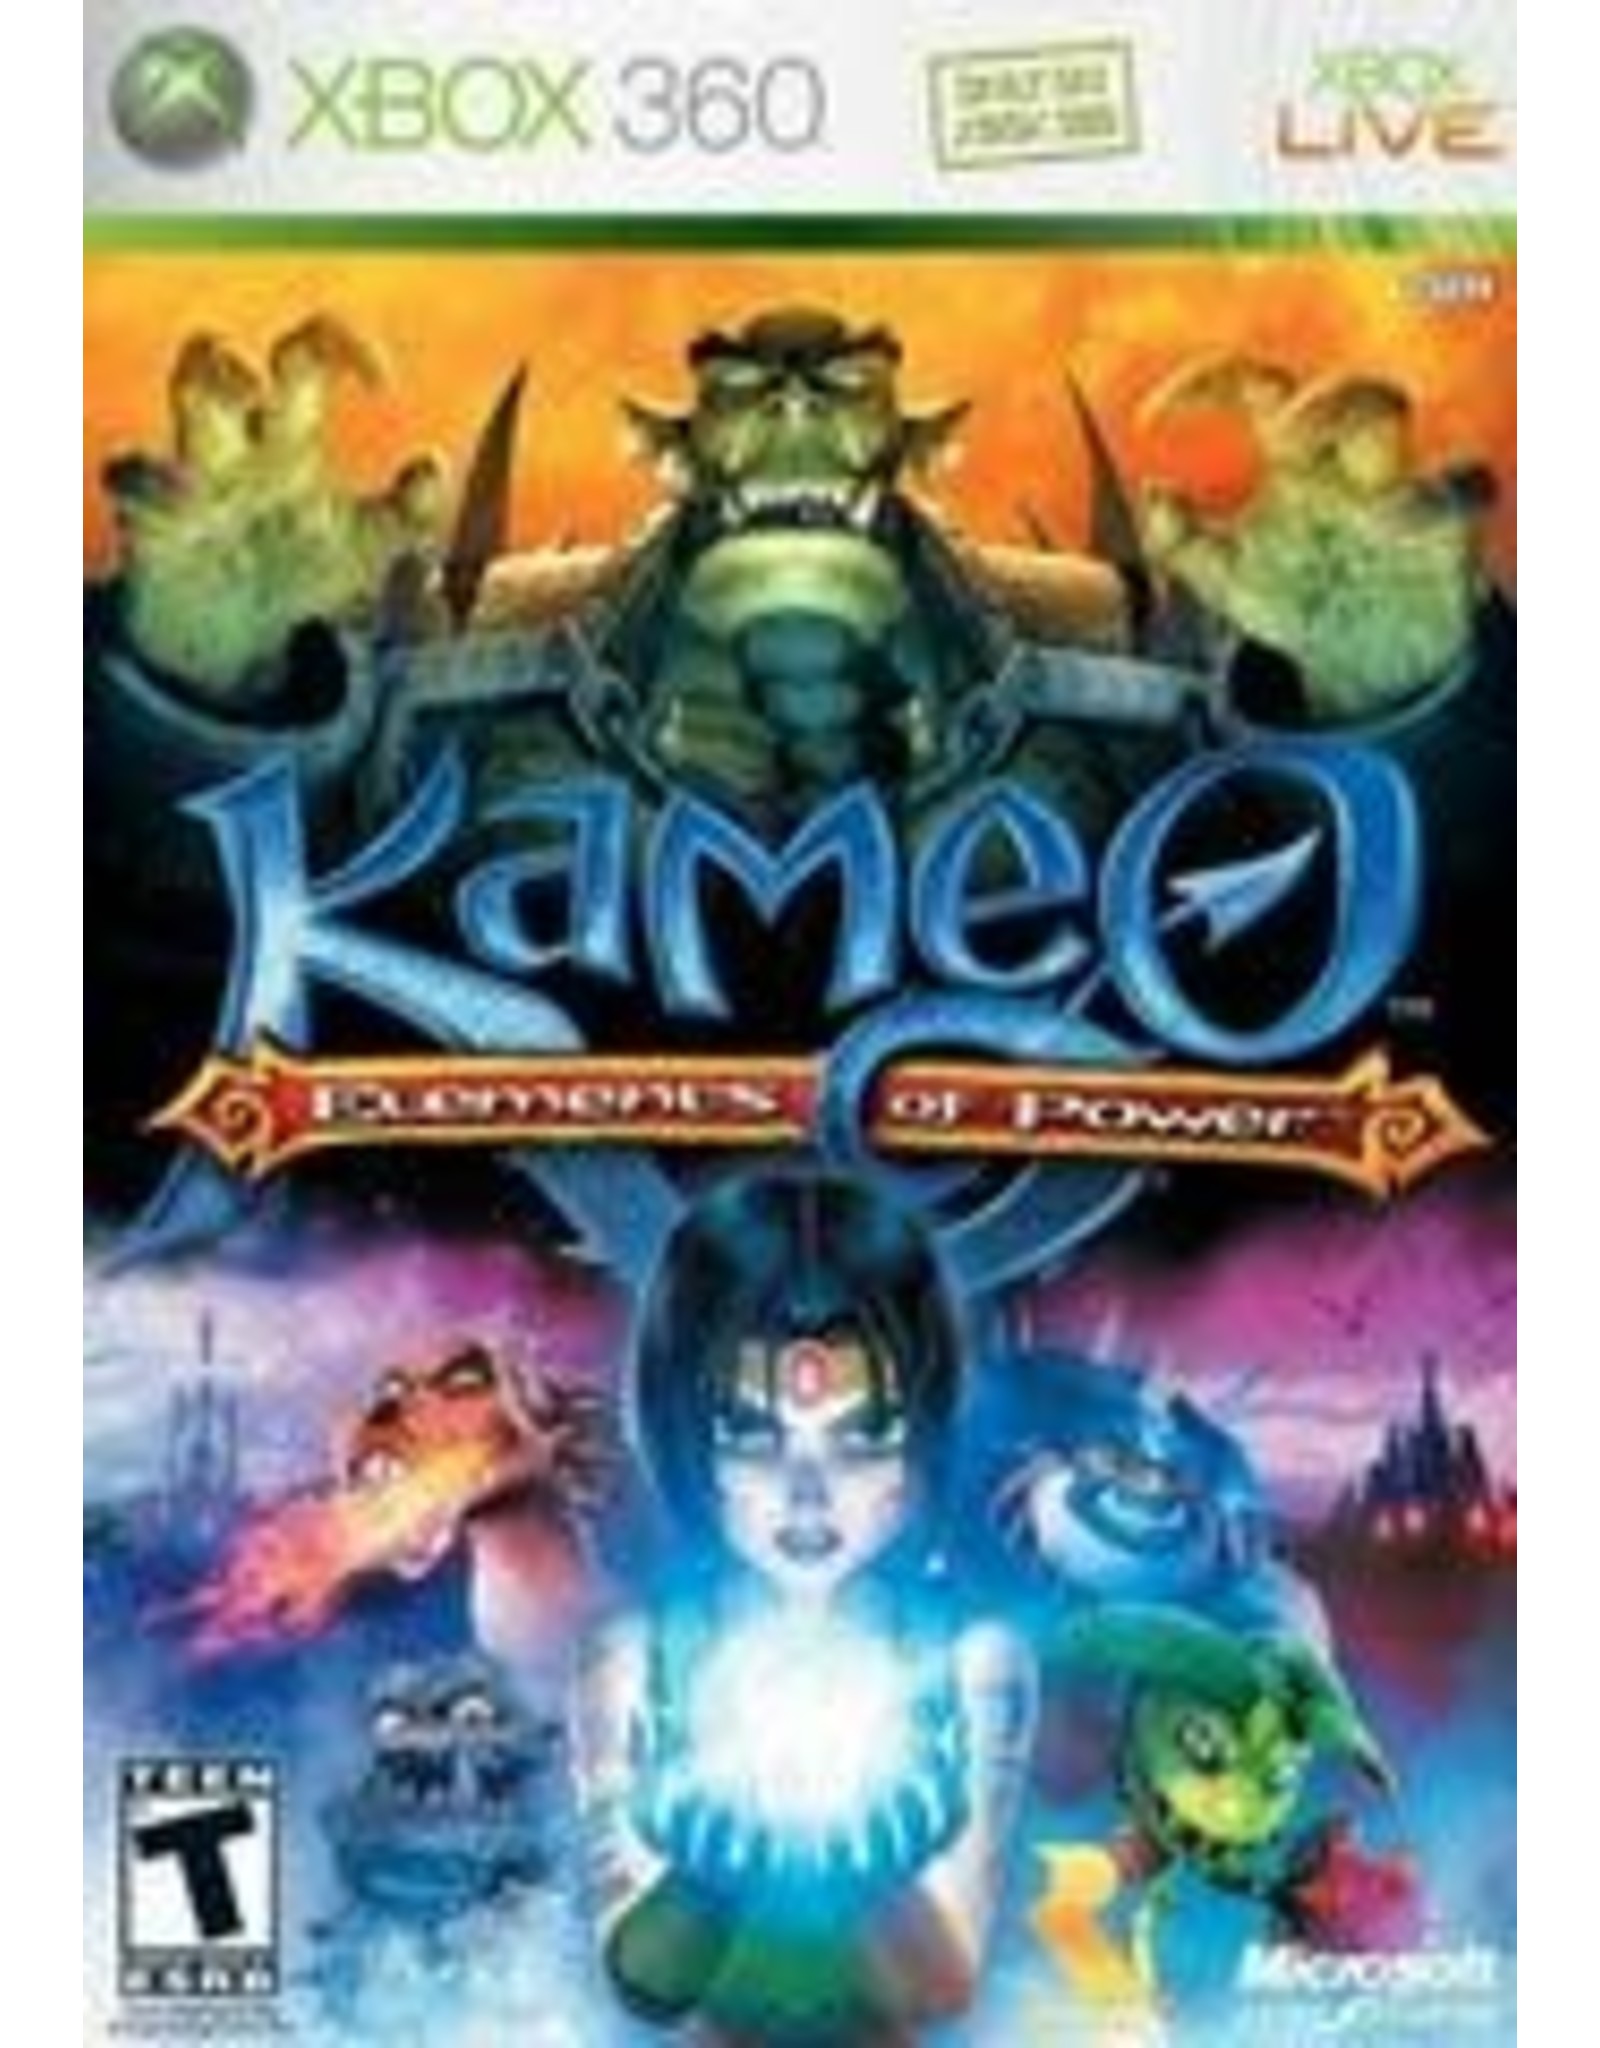 Xbox 360 Kameo Elements of Power (No Manual)